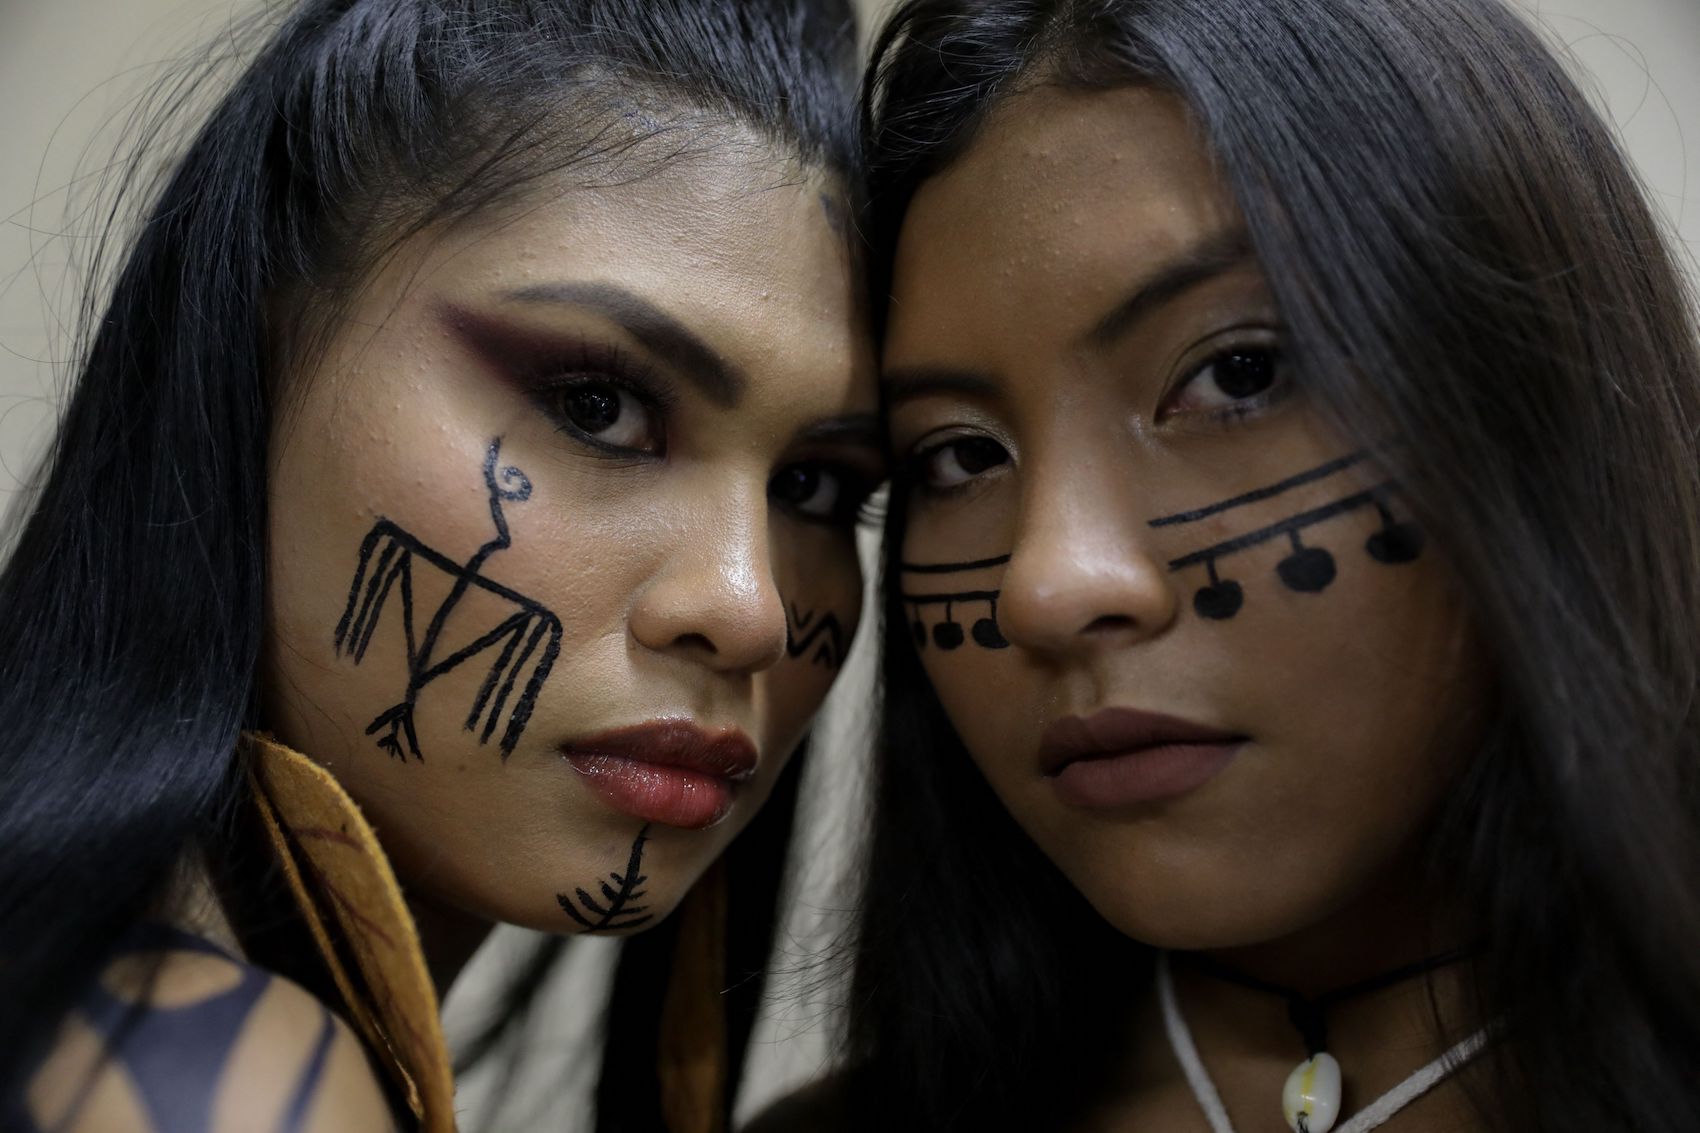 2 woman Indigenous models posing at the fashion show